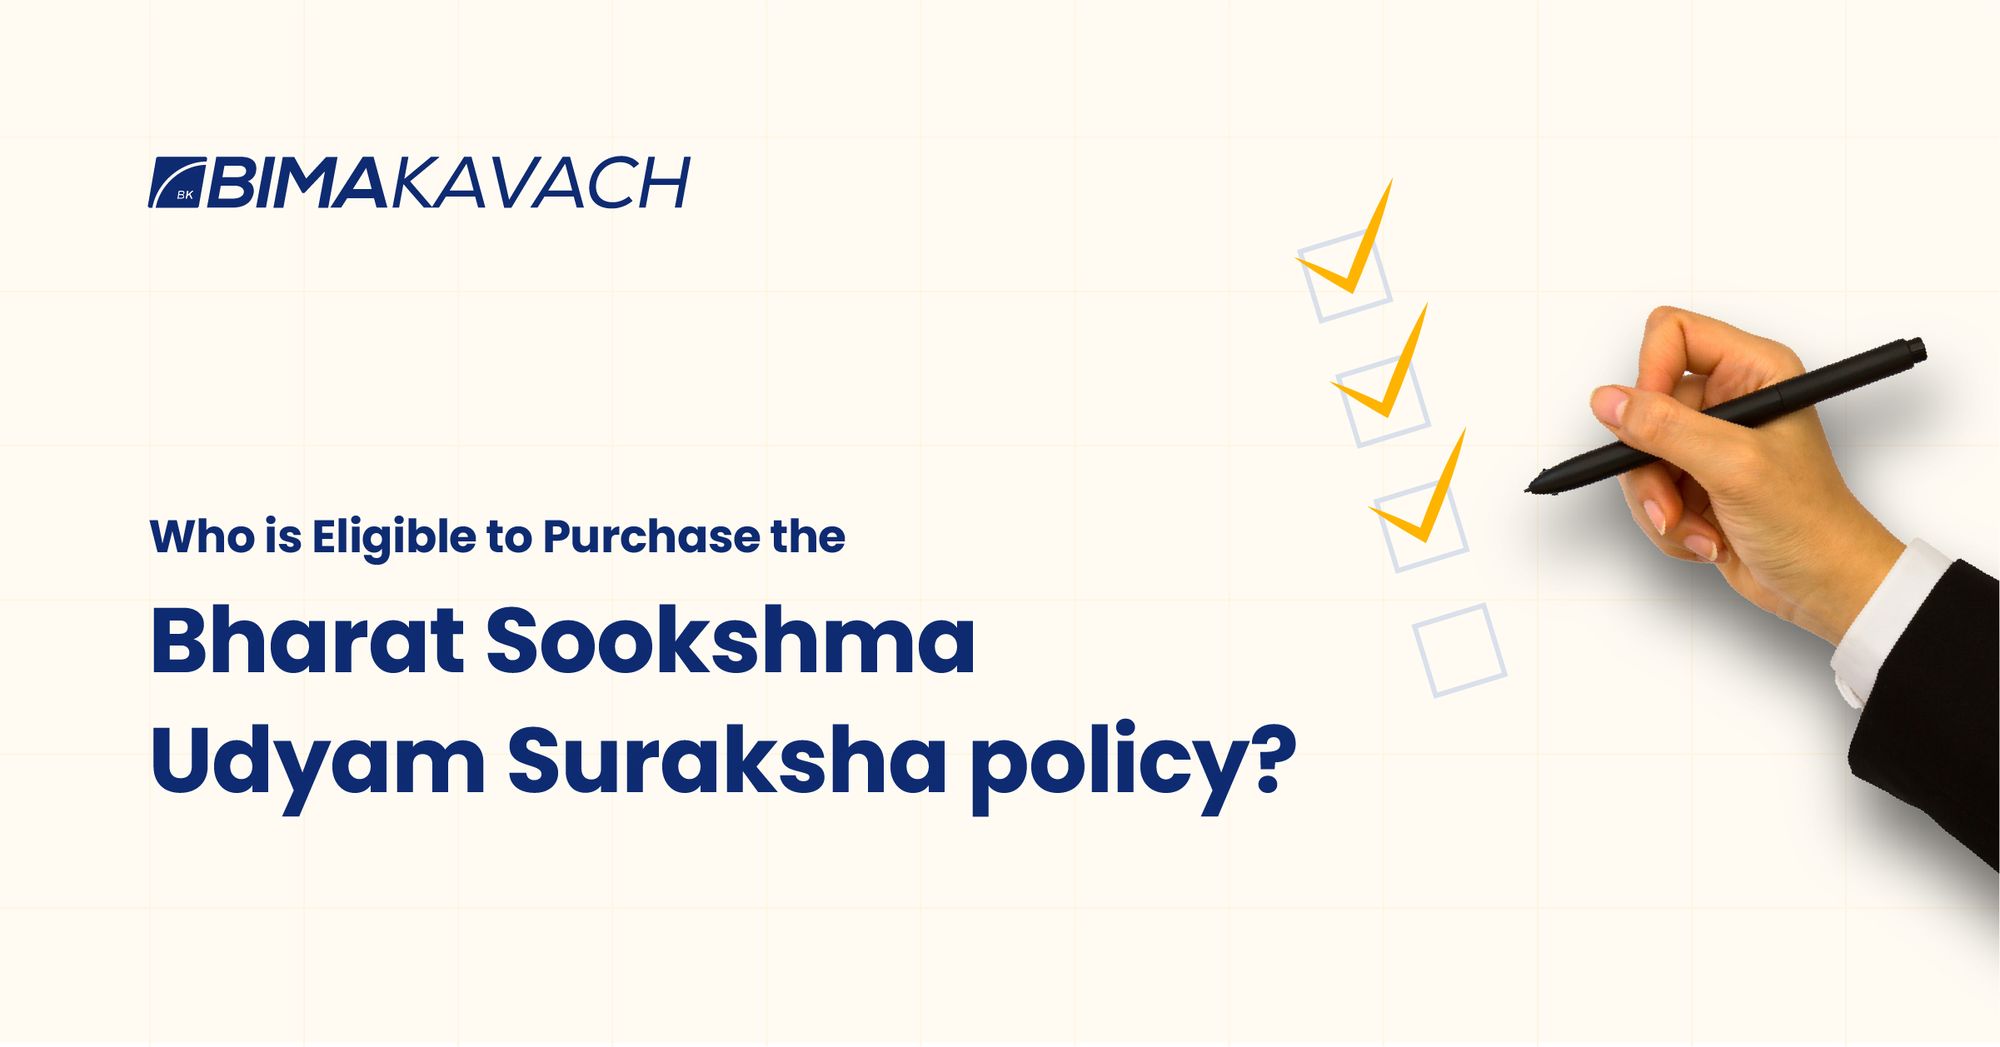 Who is Eligible to Purchase the Bharat Sookshma Udyam Suraksha Policy?